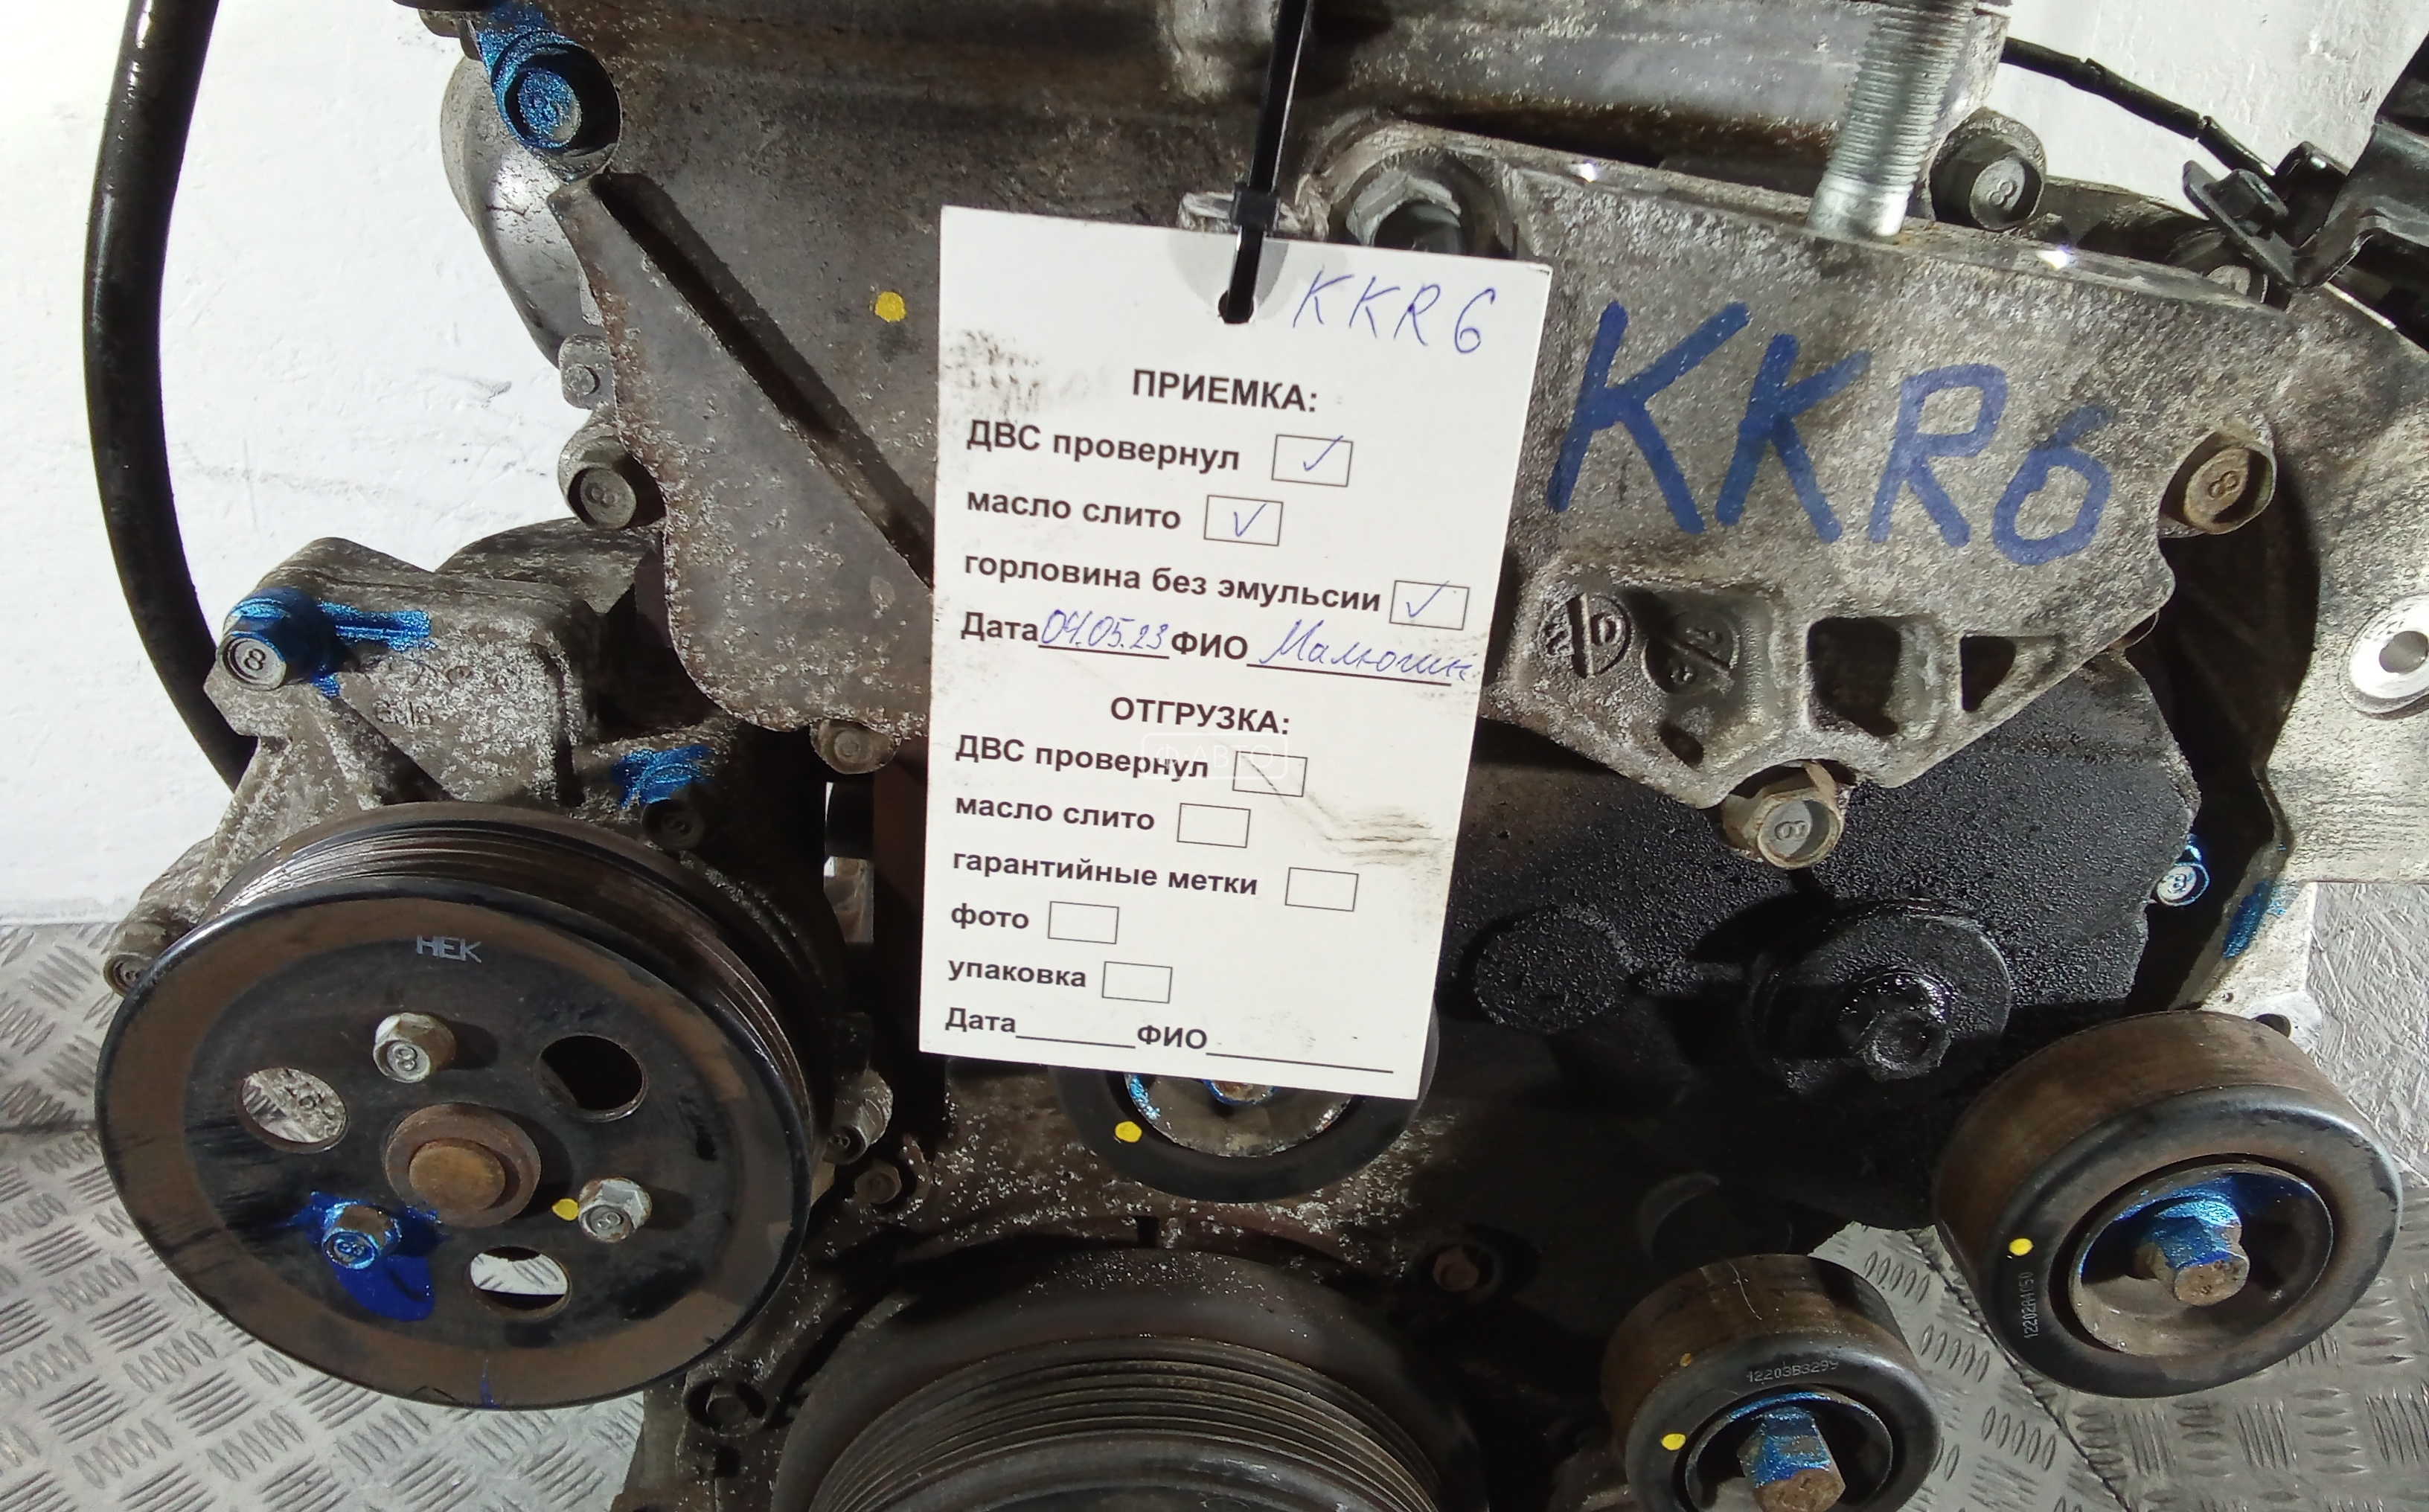 KIA Sorento Prime получил новый бензиновый двигатель 2,4 GDI